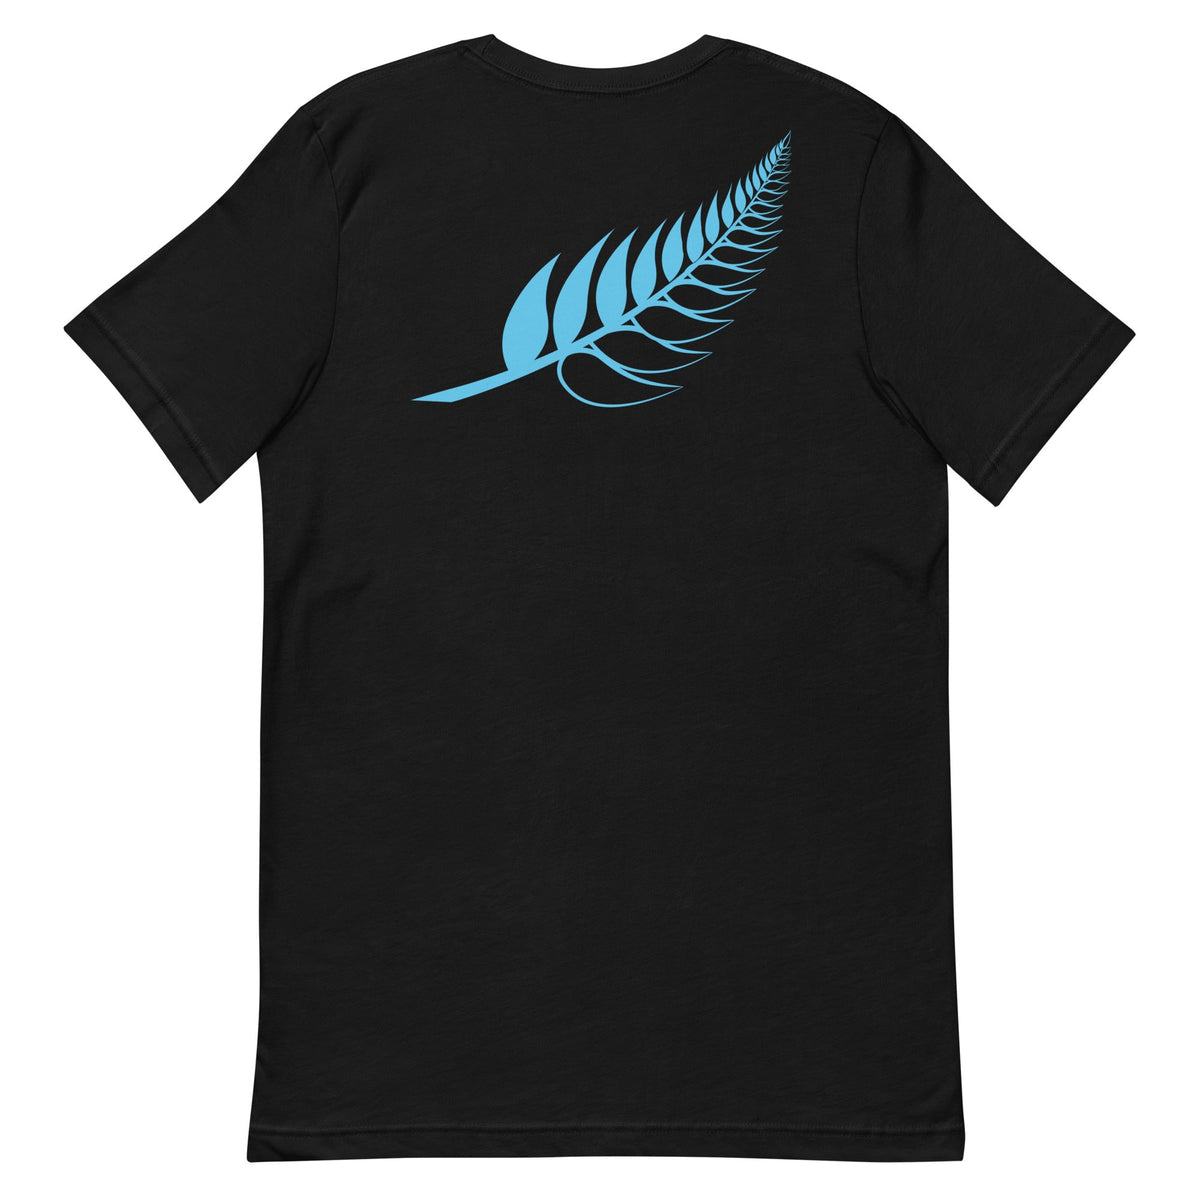 Team NZL Women&#39;s Live Ocean Black T-Shirt